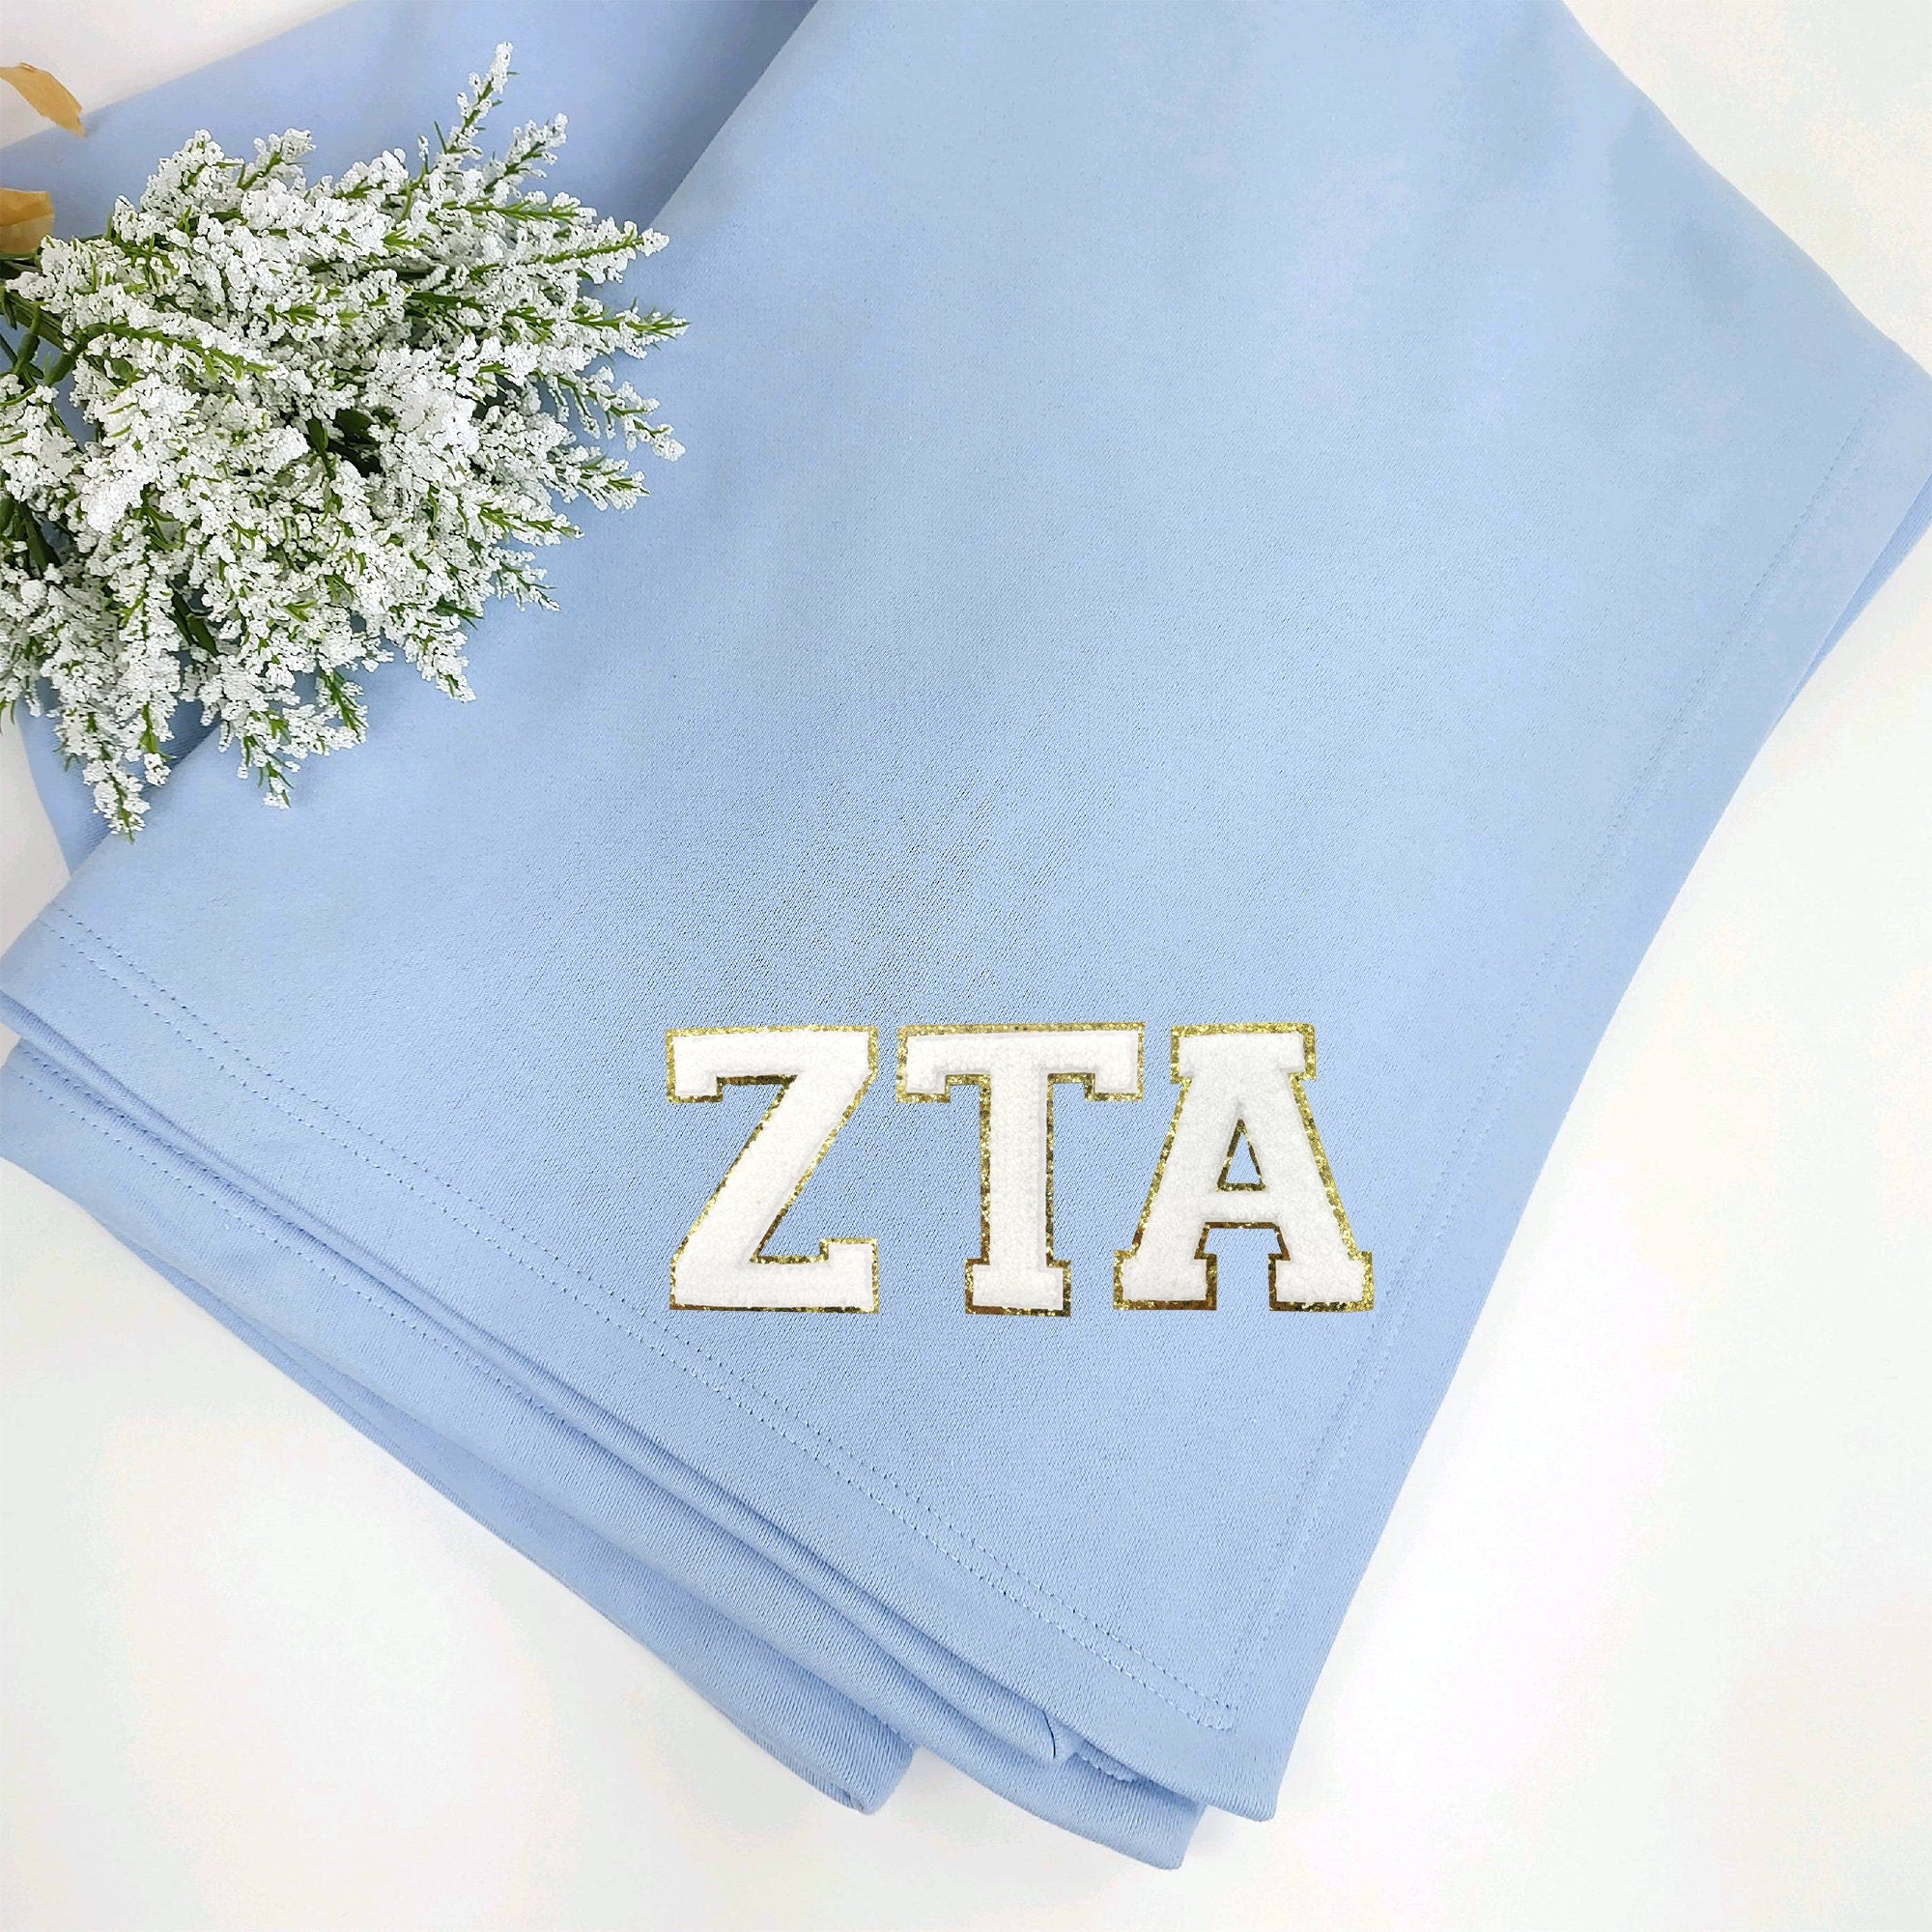 Zeta Tau Alpha Patch Sweatshirt Blanket, Multiple Colors, Warm and Soft, Perfect Sorority Gift